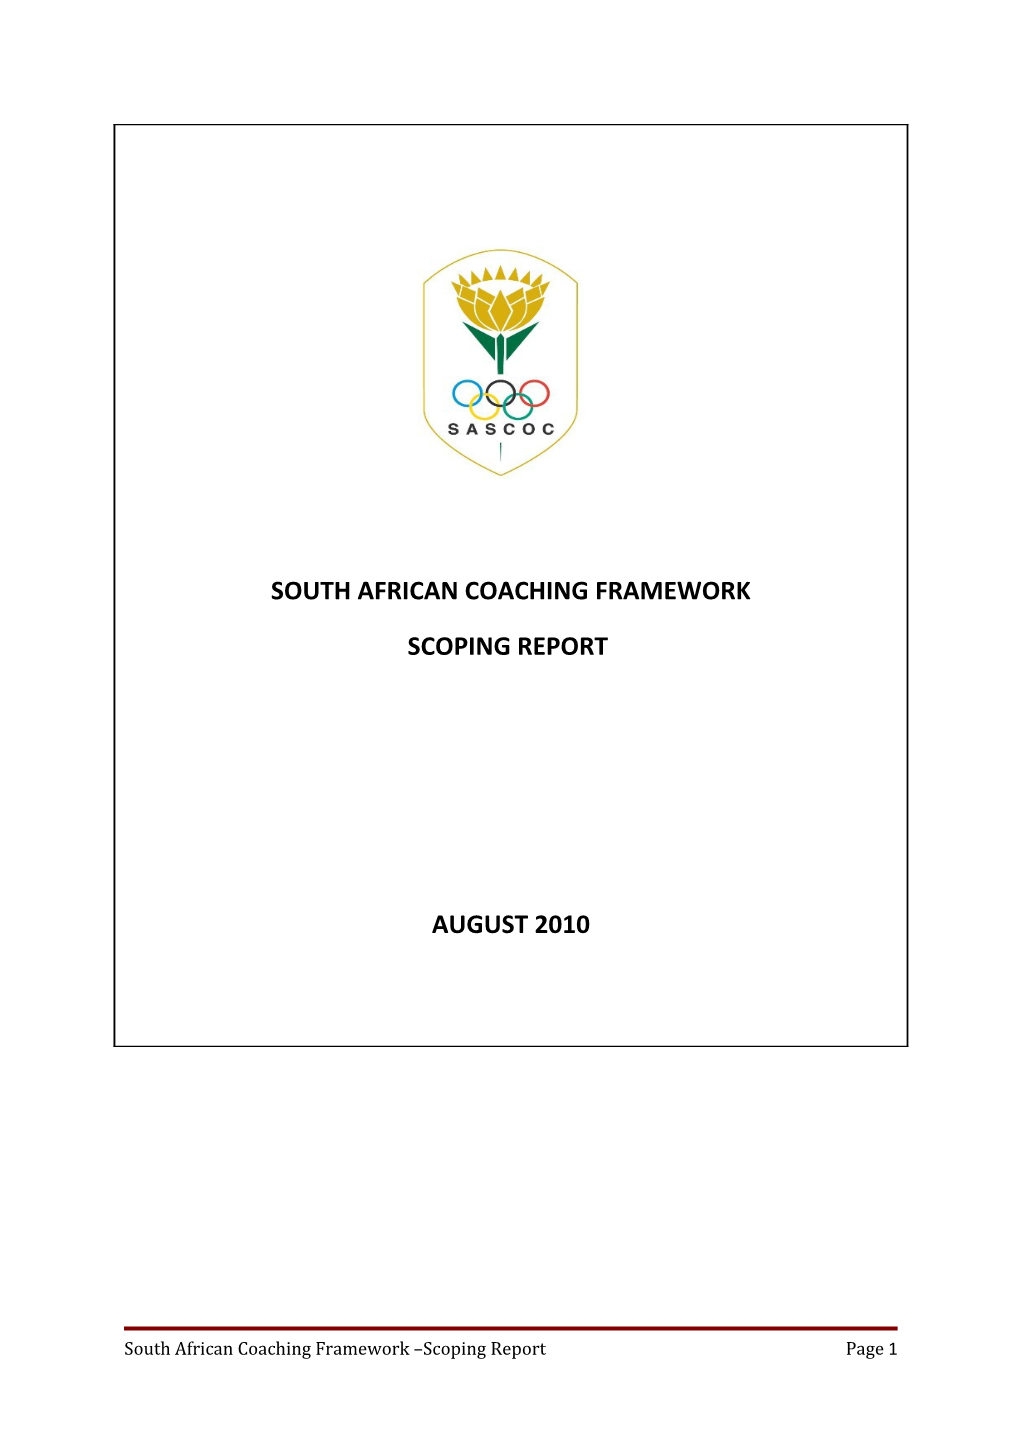 South African Coaching Framework